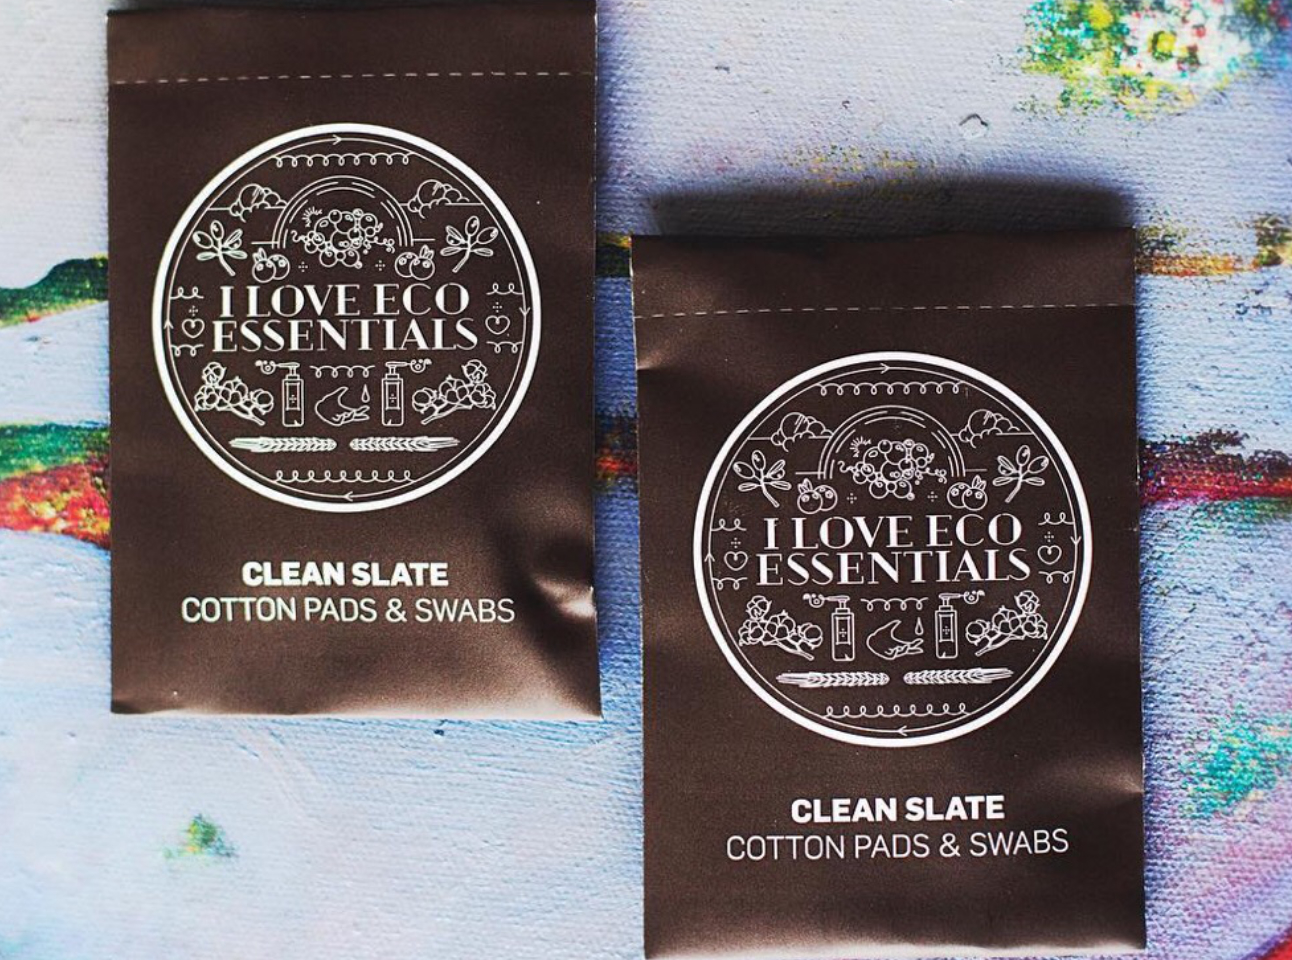 Soulmade "Clean Slate" Cotton Pads & Swabs